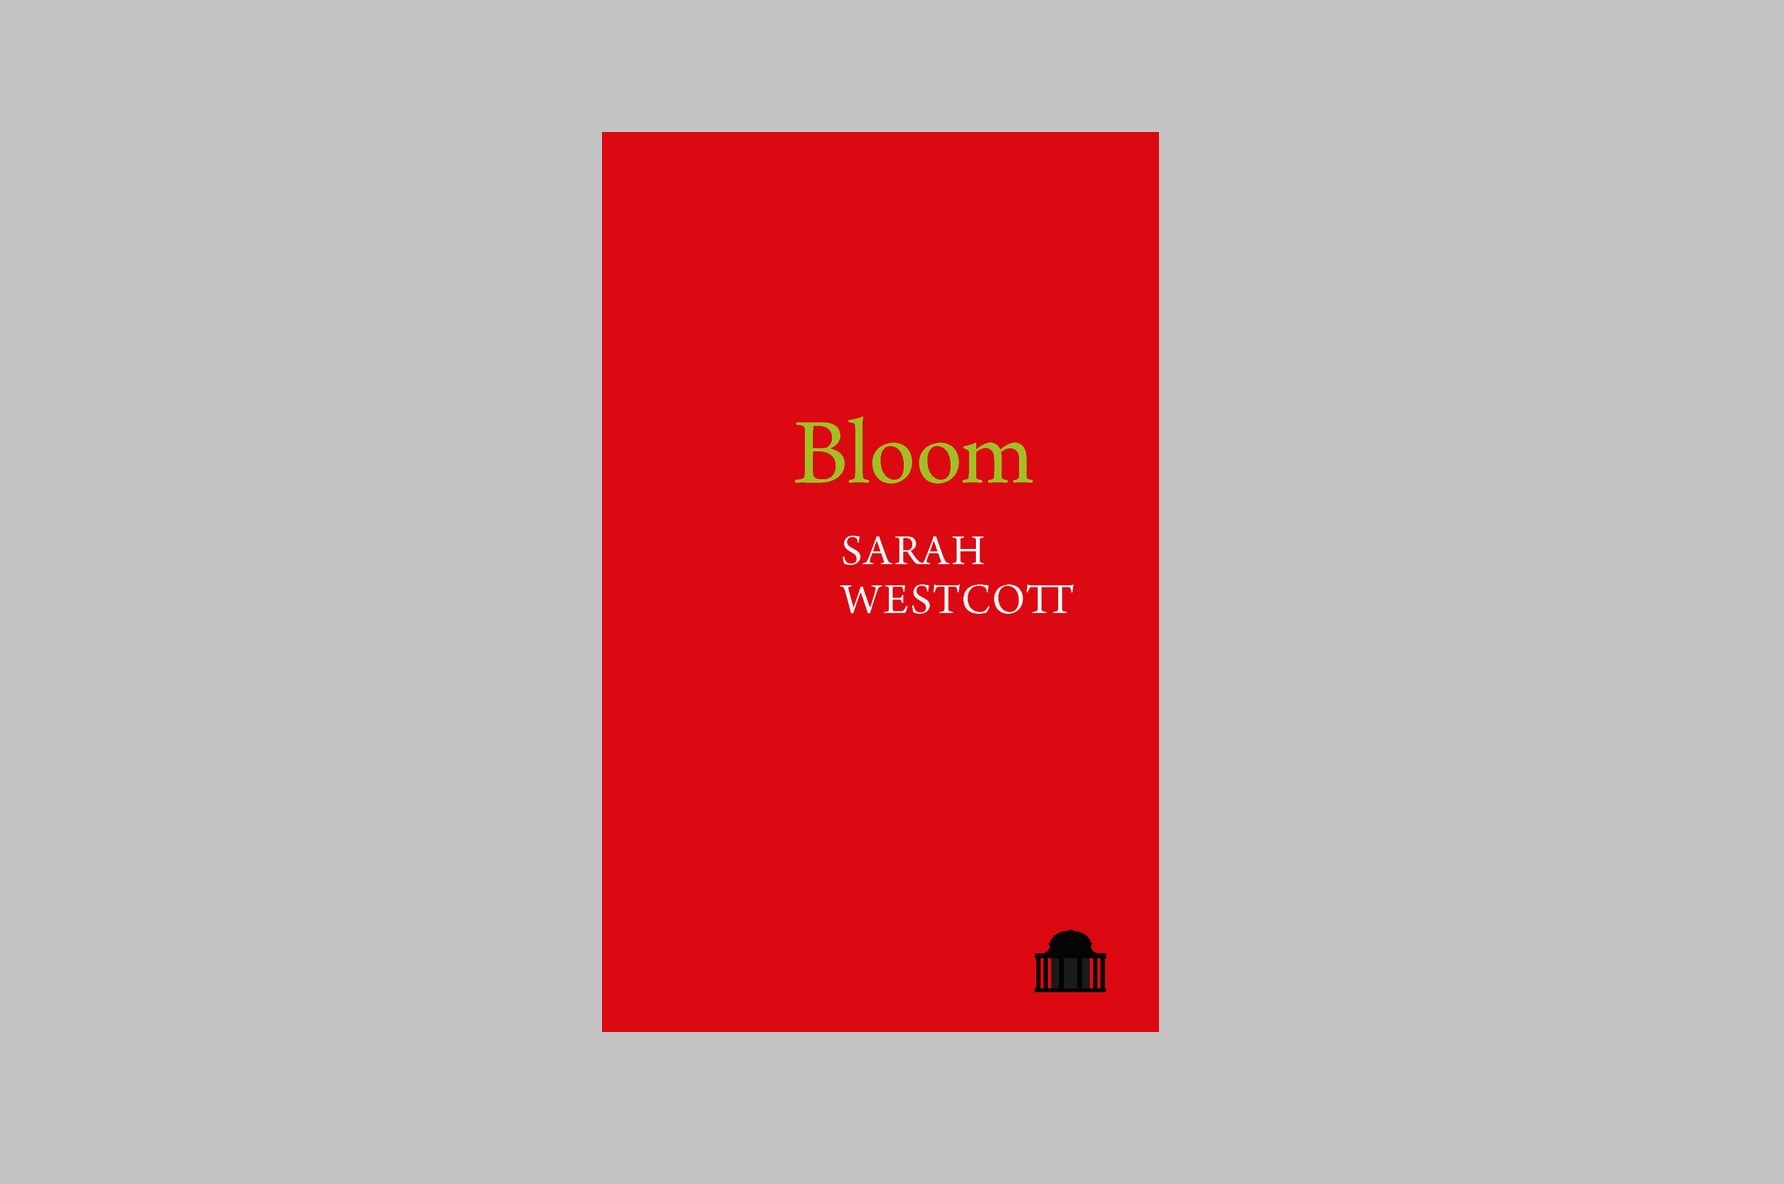 On ‘Bloom’ by Sarah Westcott